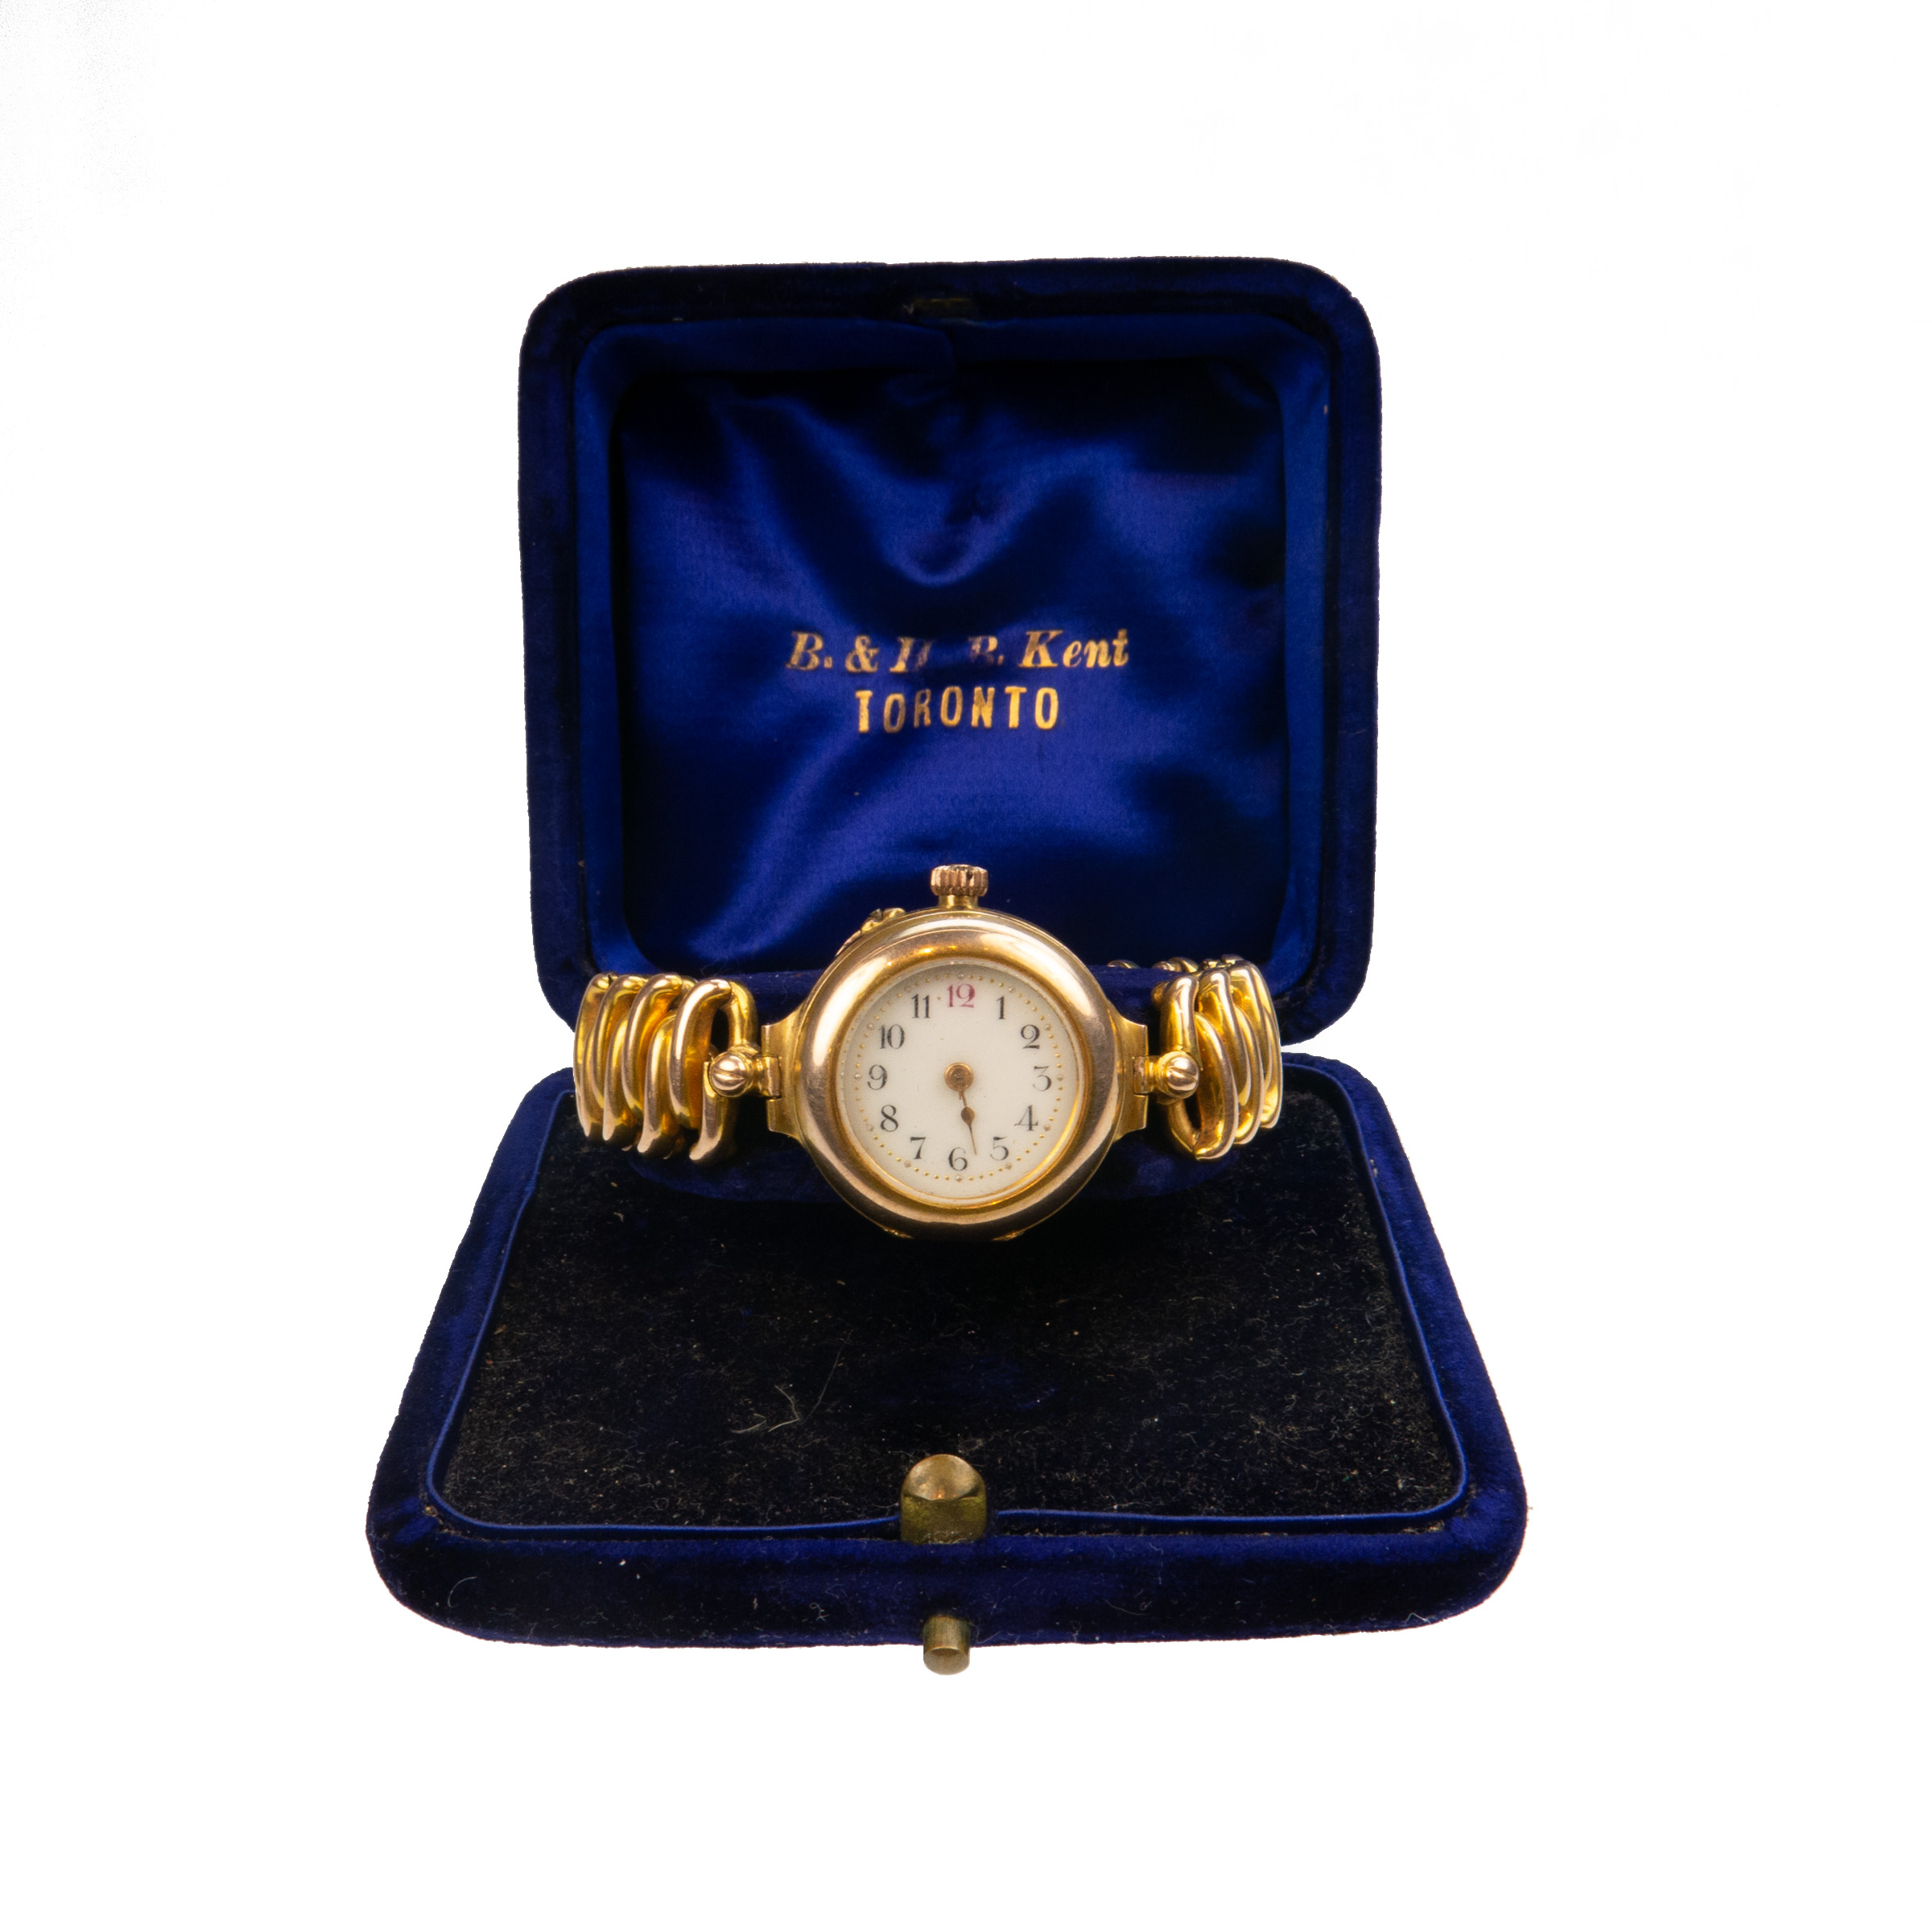 Lady's Early 20th Century Wristwatch